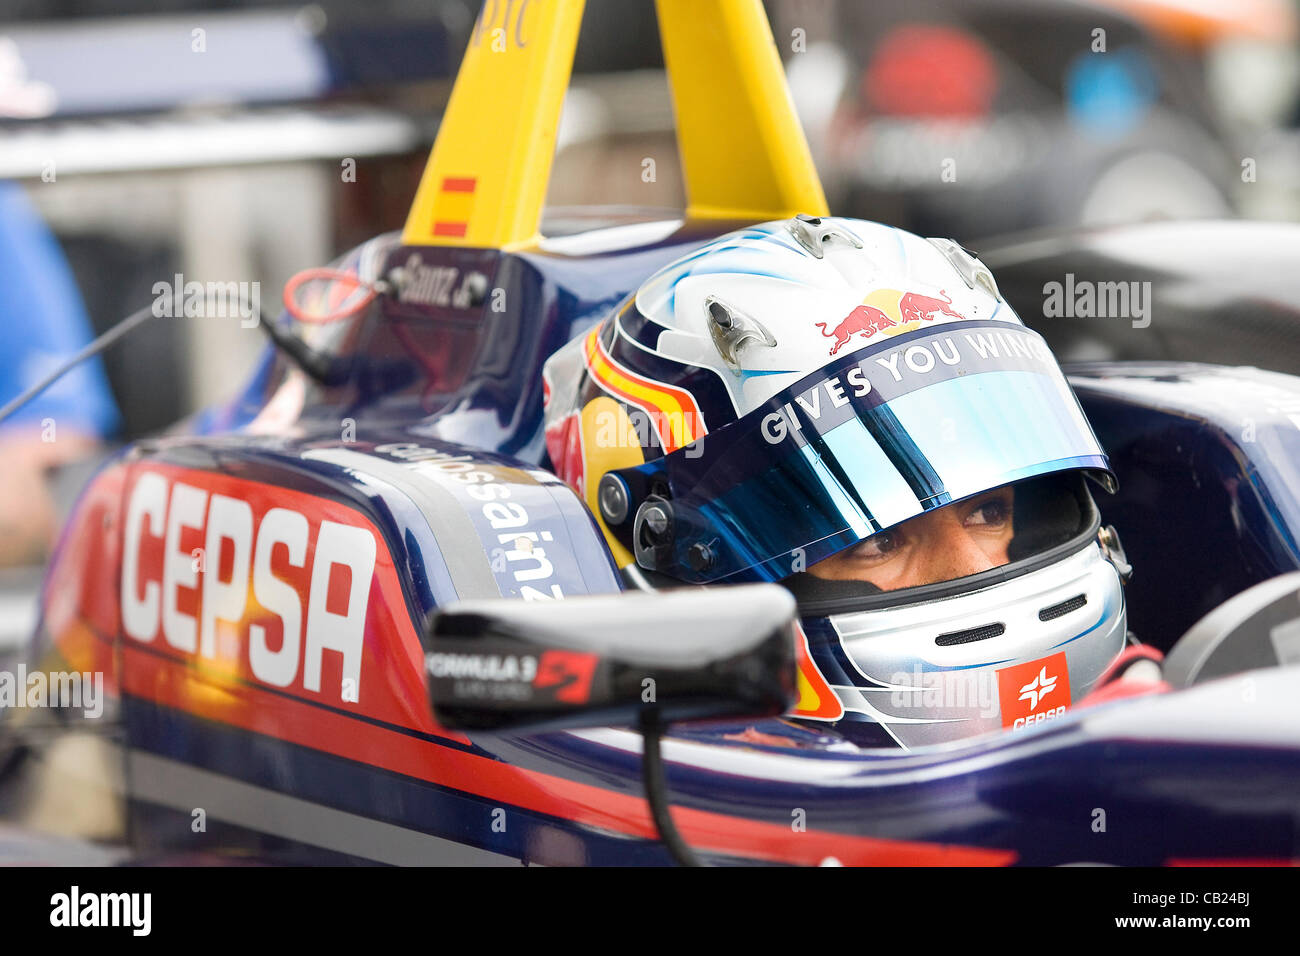 18.05.2012 Brands Hatch, Inghilterra. Formula 3 Euro Series, Carlos Sainz (ESP) dietro la ruota durante il venerdi di FP1. Foto Stock